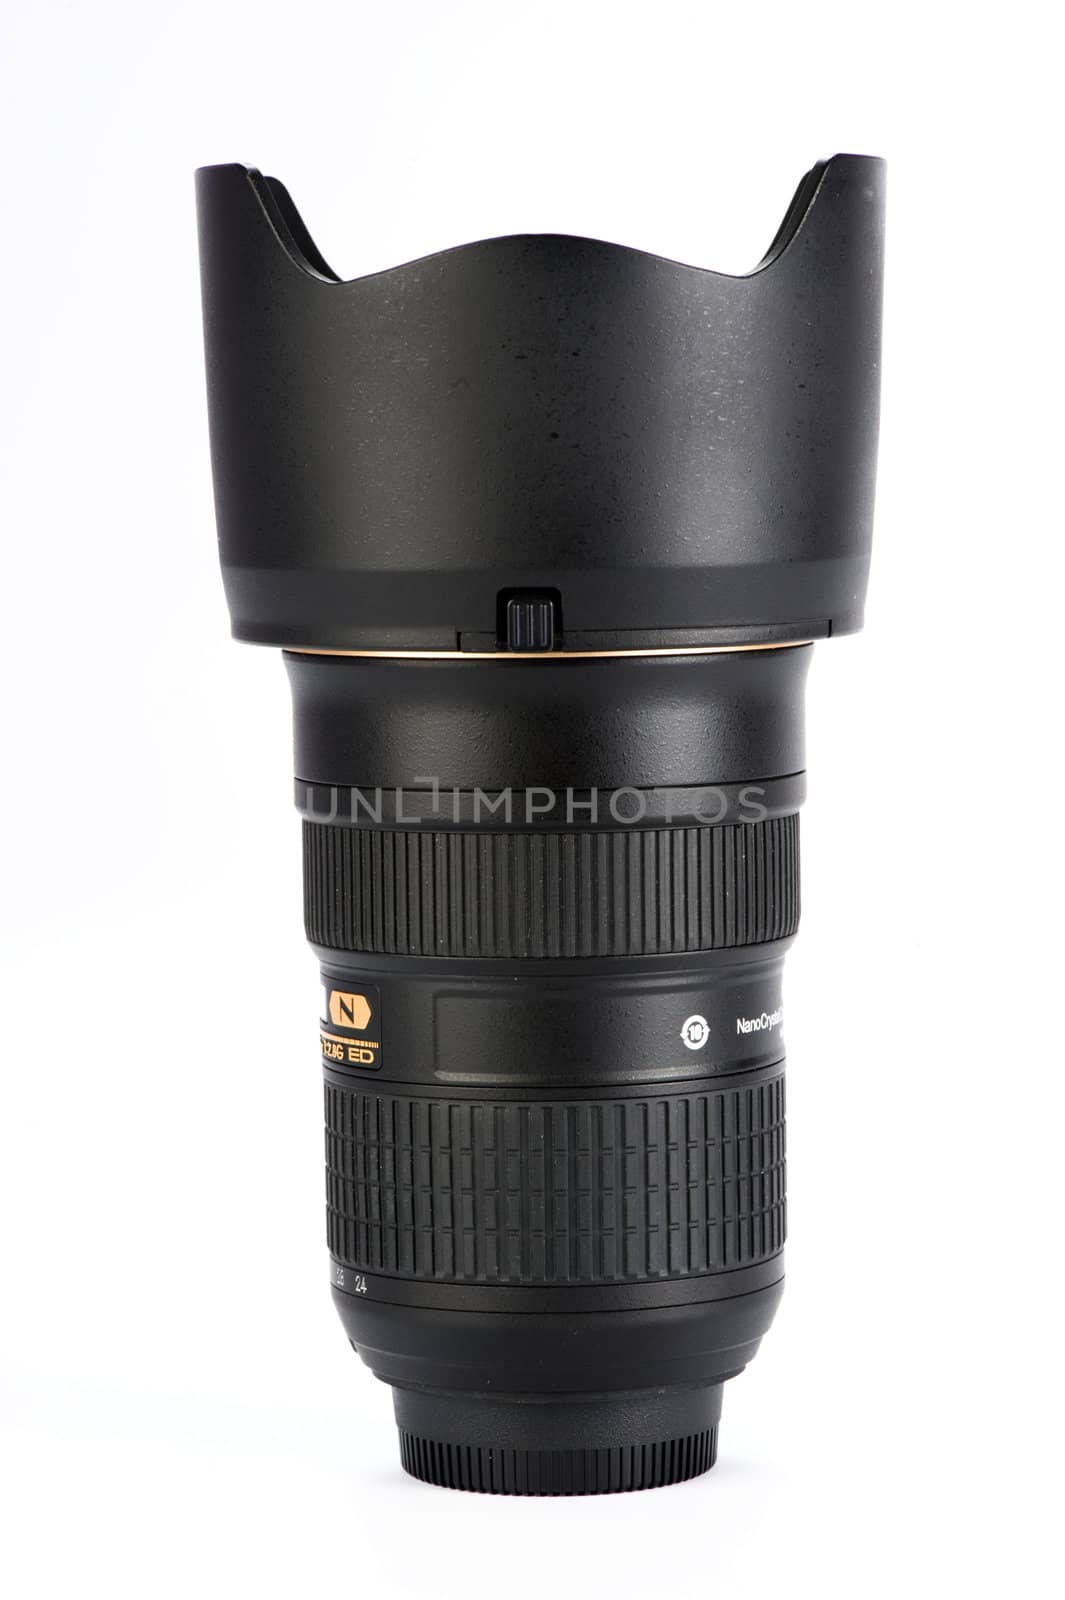 High end lens for a DSLR camera by fljac